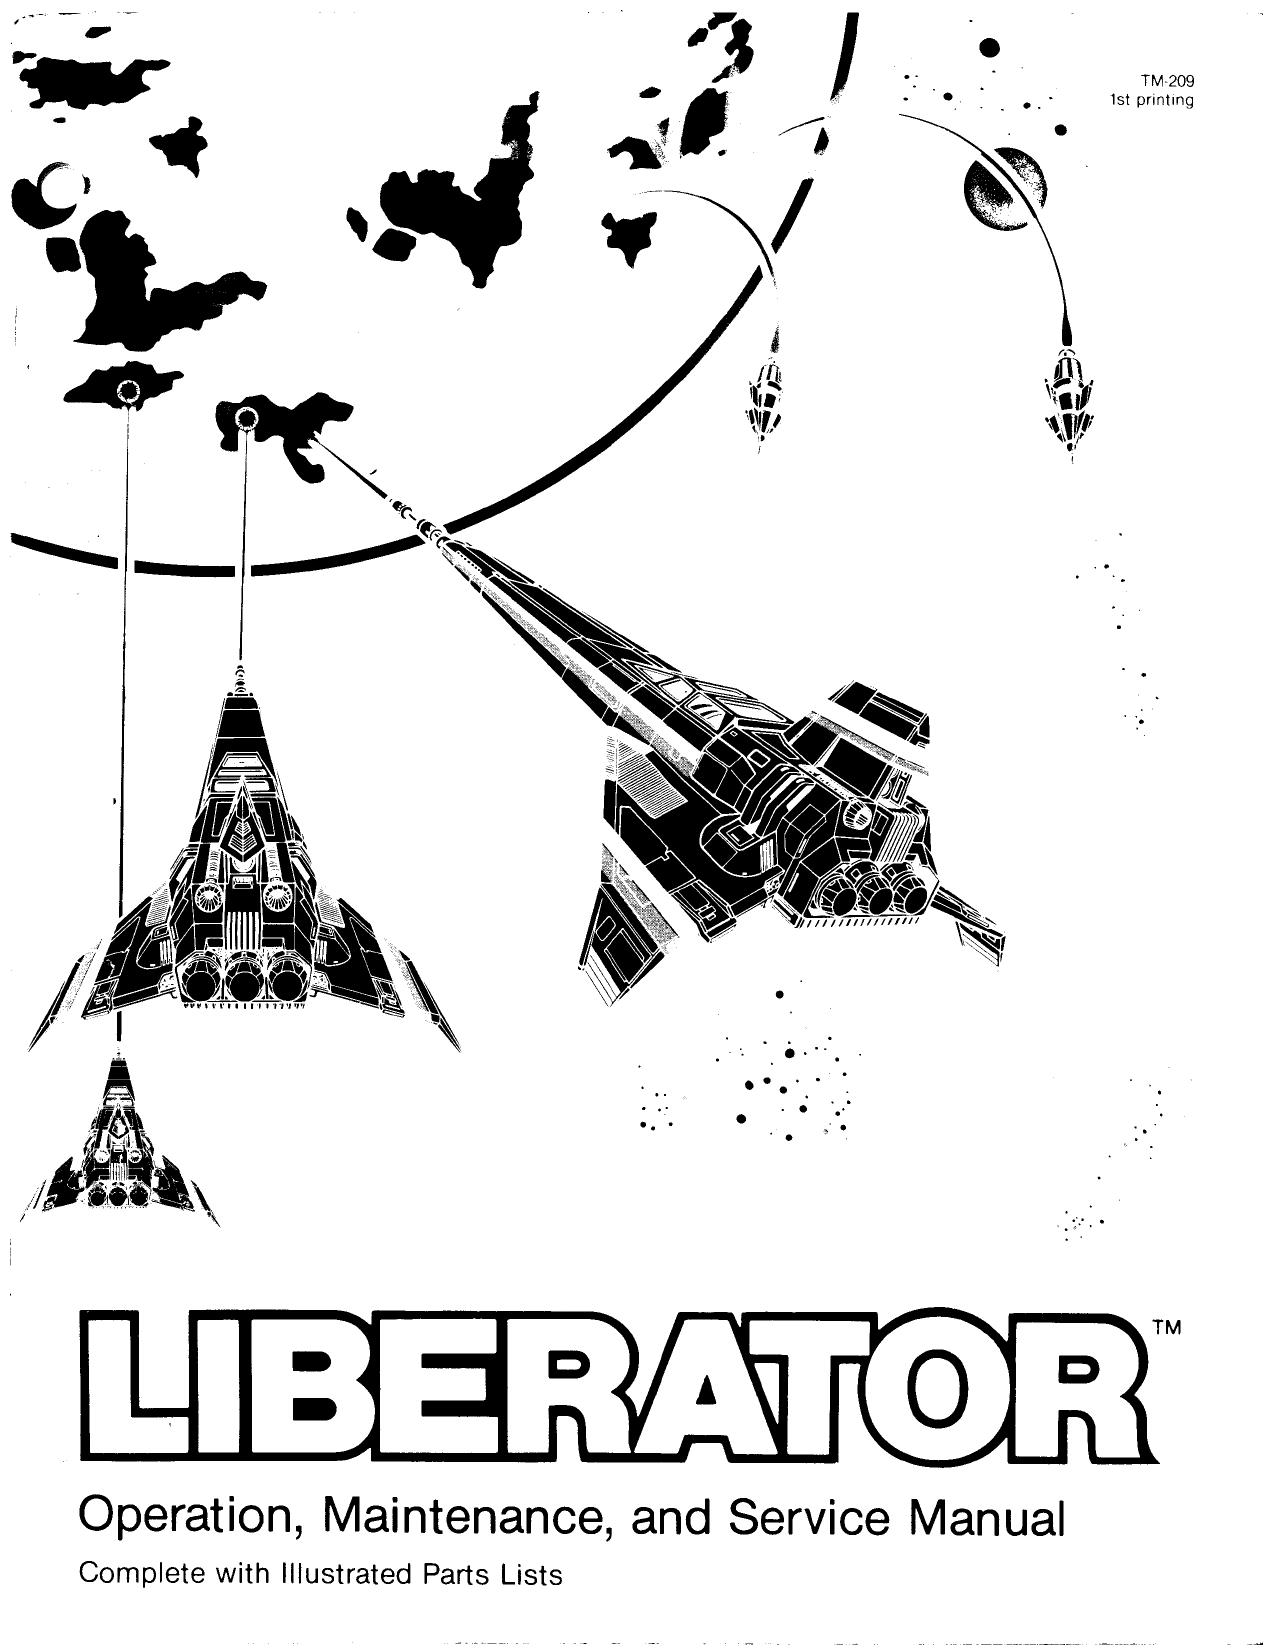 Liberator TM-209 1st Printing